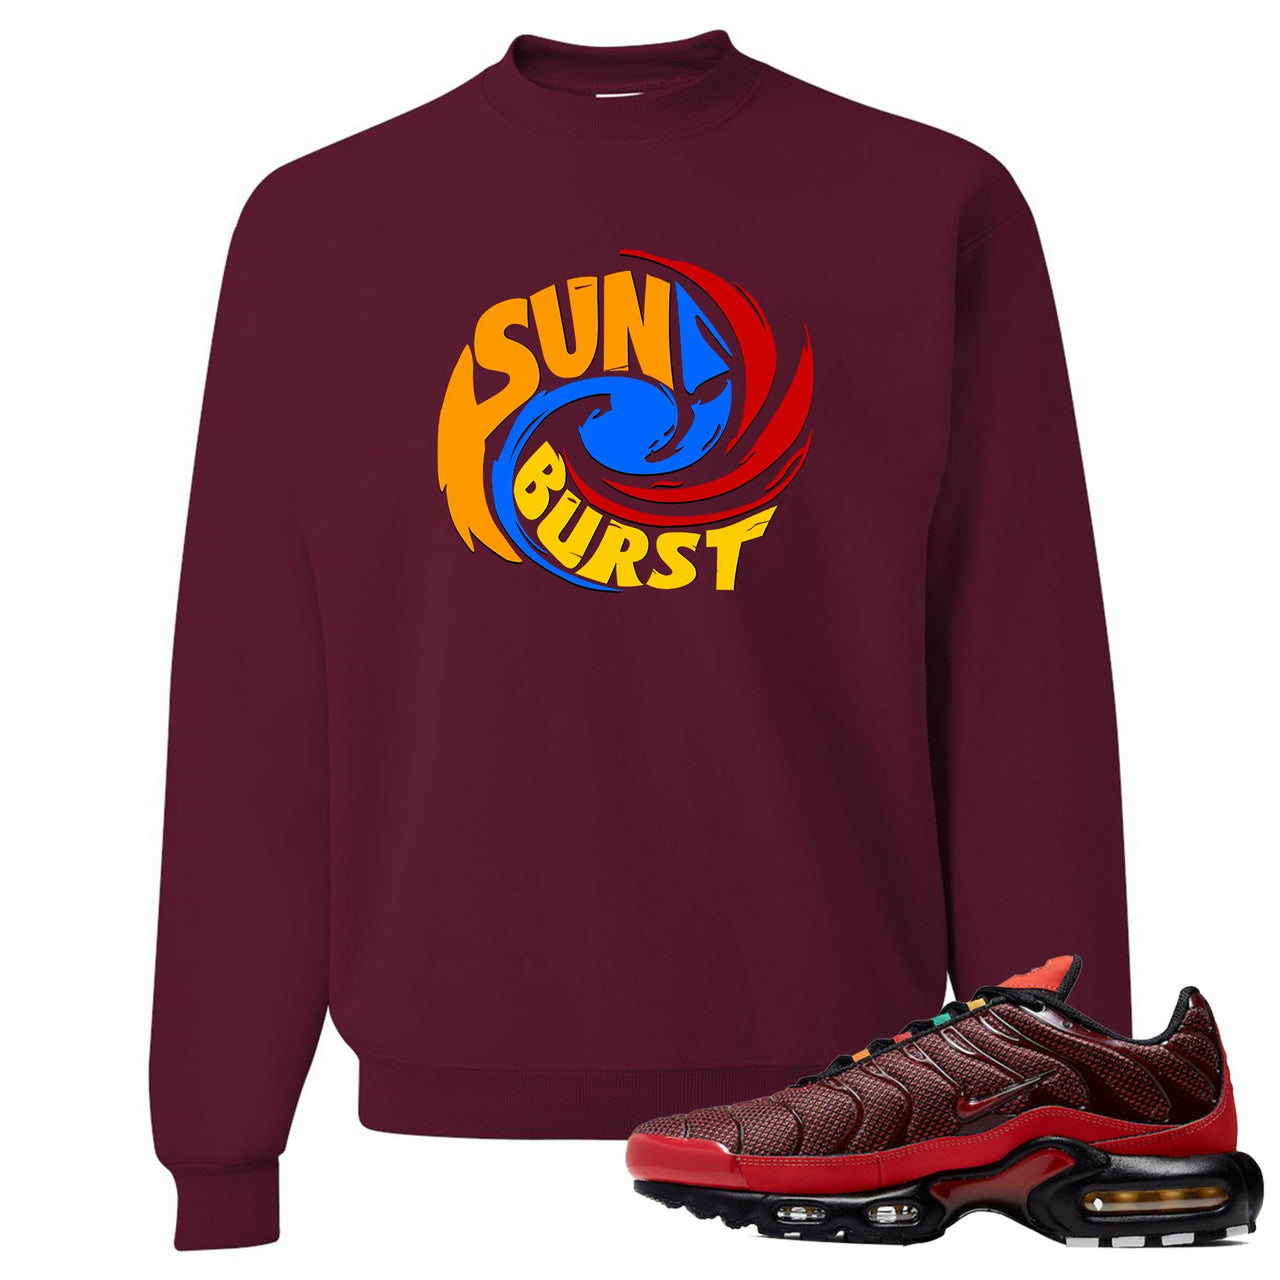 printed on the front of the air max plus sunburst sneaker matching maroon crewneck sweatshirt is the sunburst hurricane logo